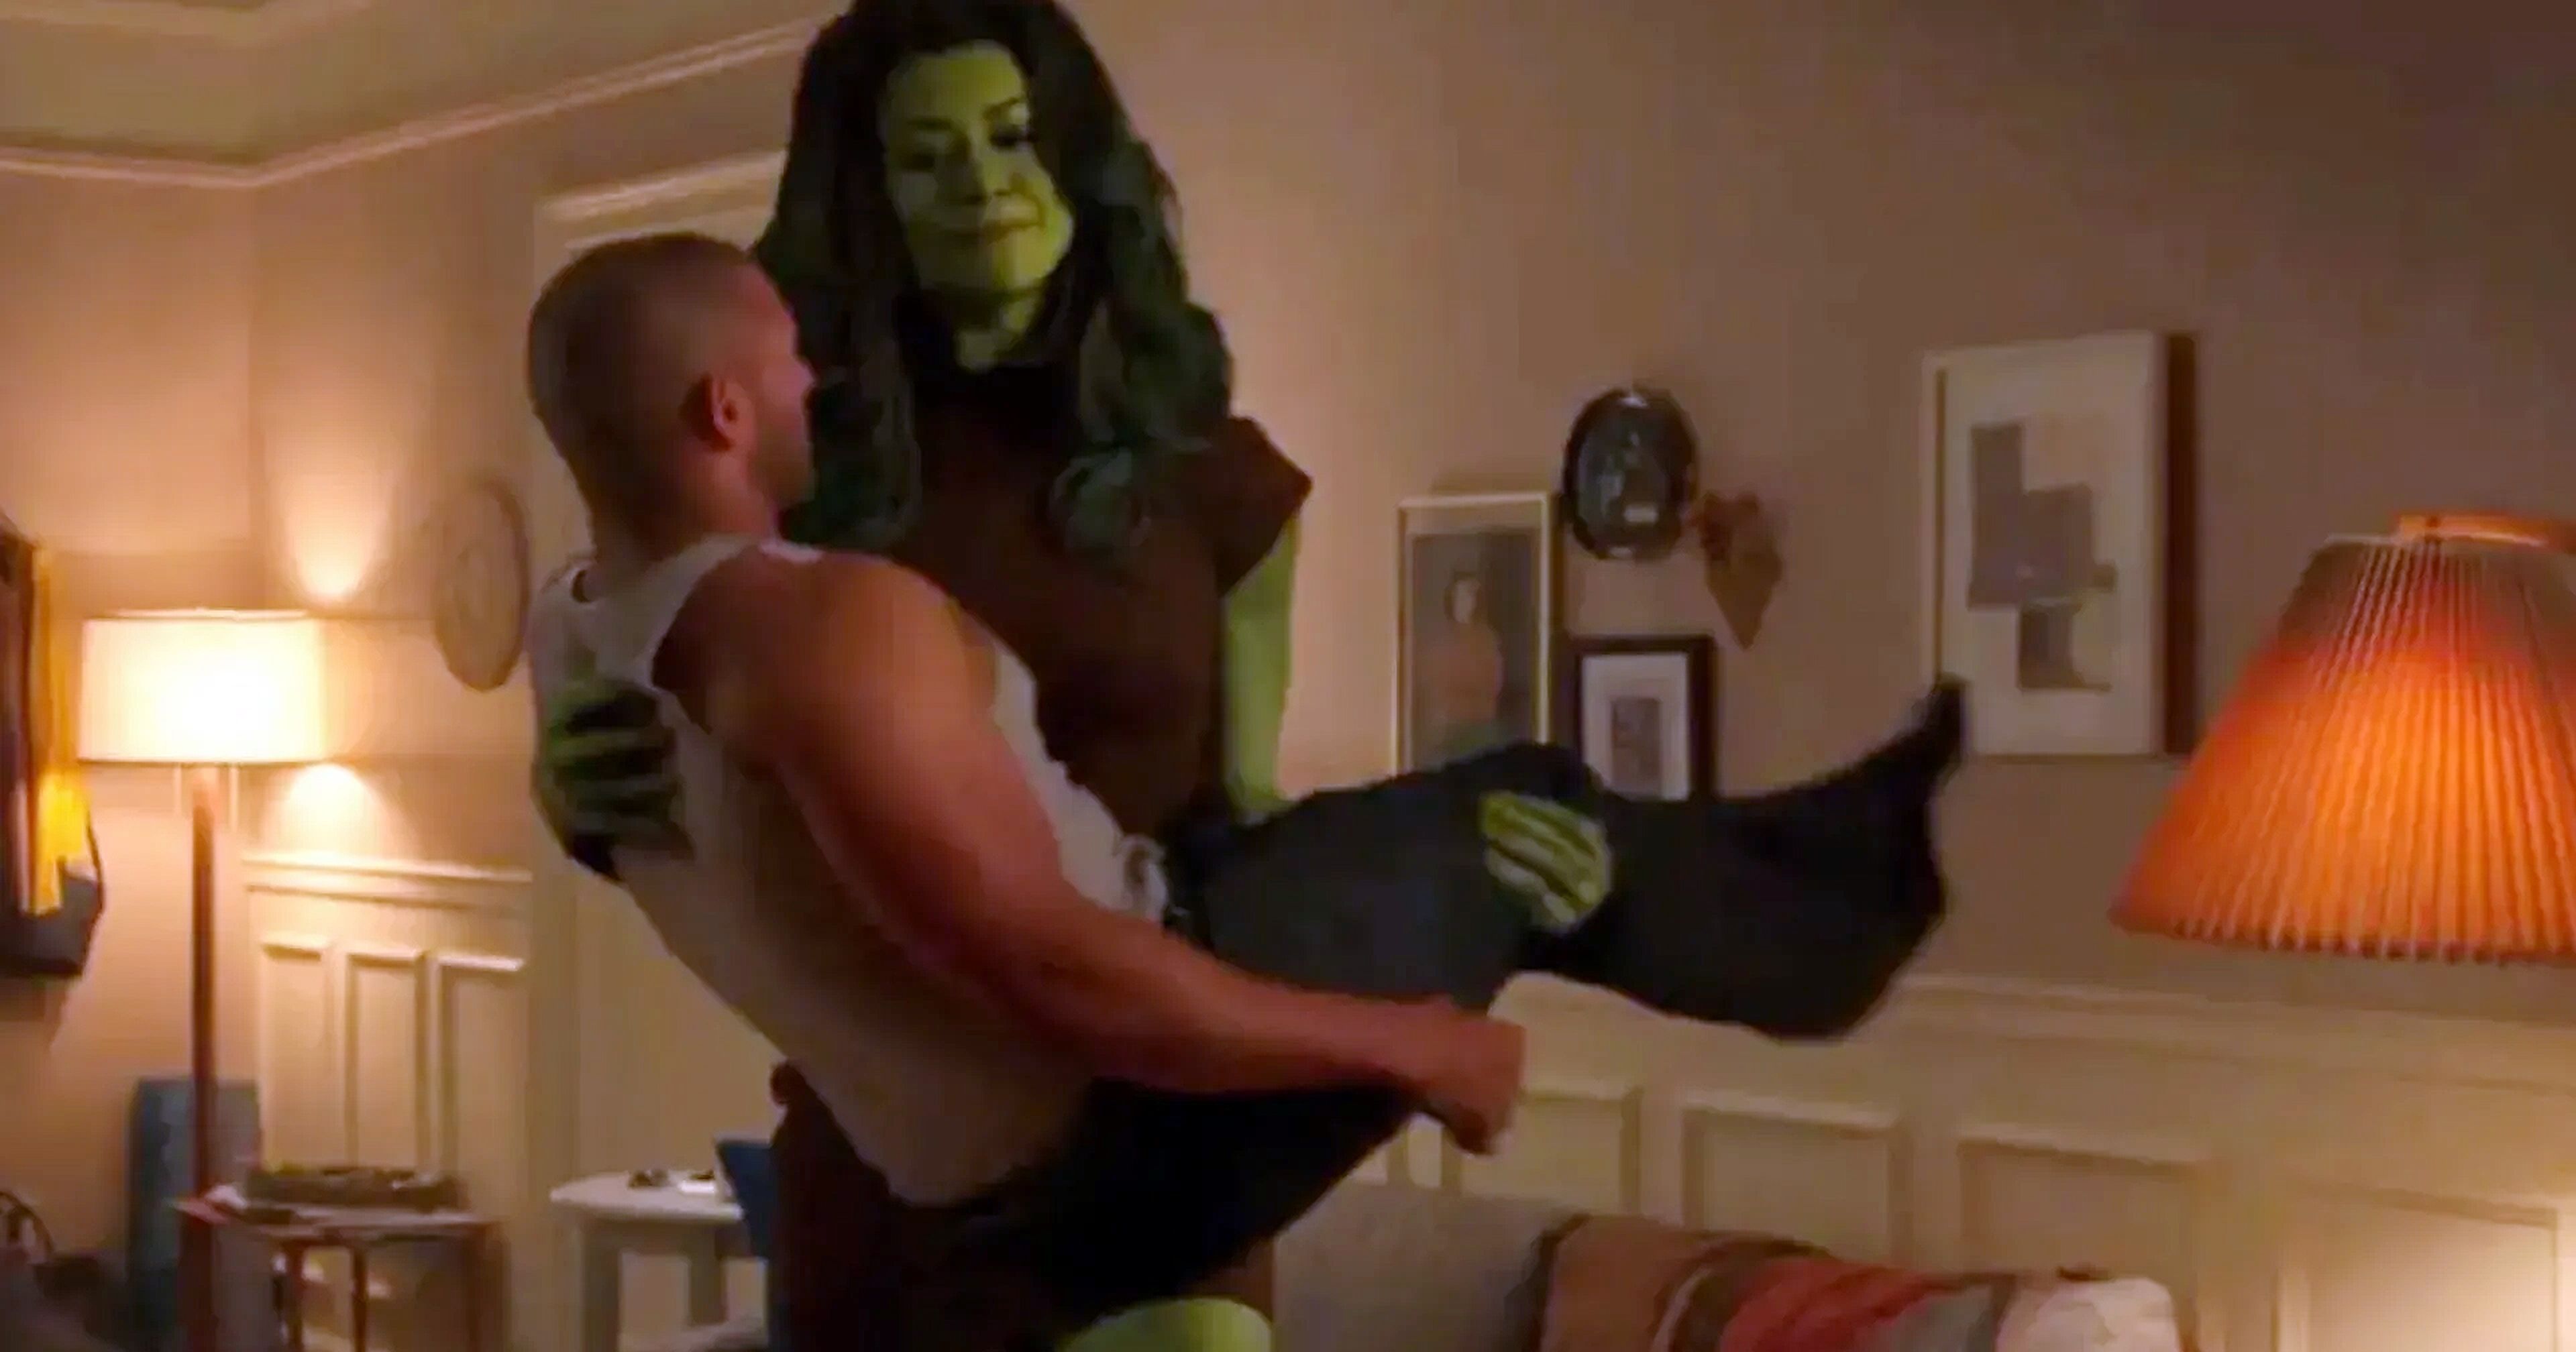 Crítica 1x04 de She-Hulk: Abogada Hulka - Marvel vuelve a reírse